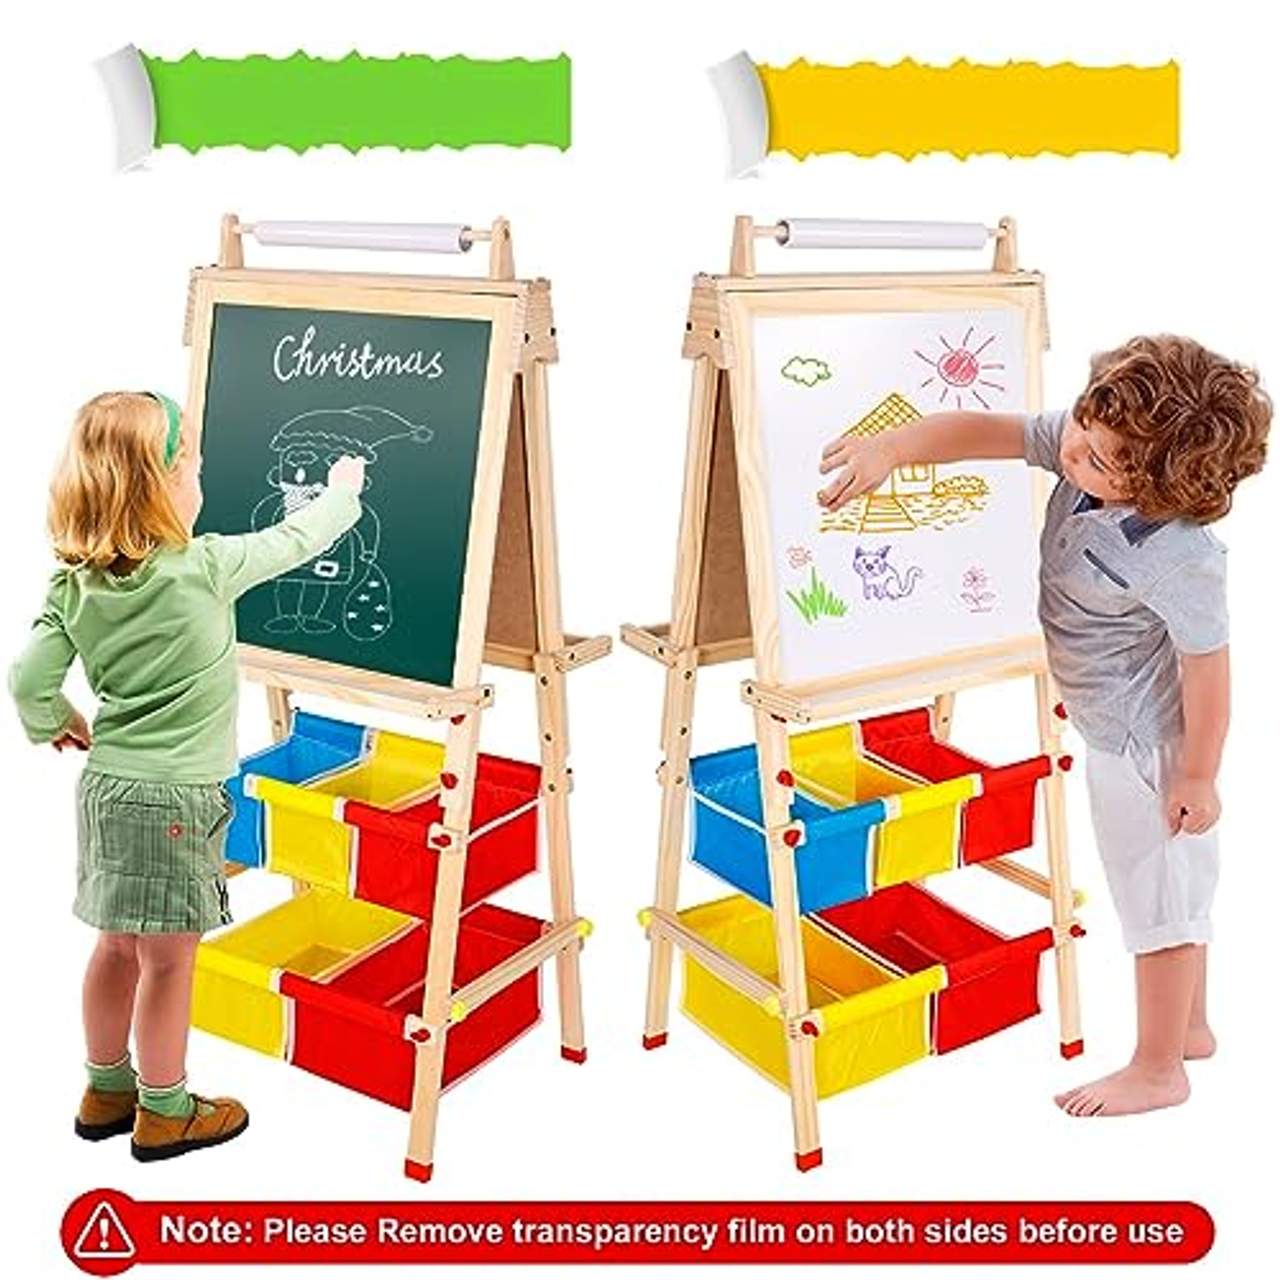 Kinderstaffelei aus Holz-Doppelseitige Kindertafel & Whiteboard stehend